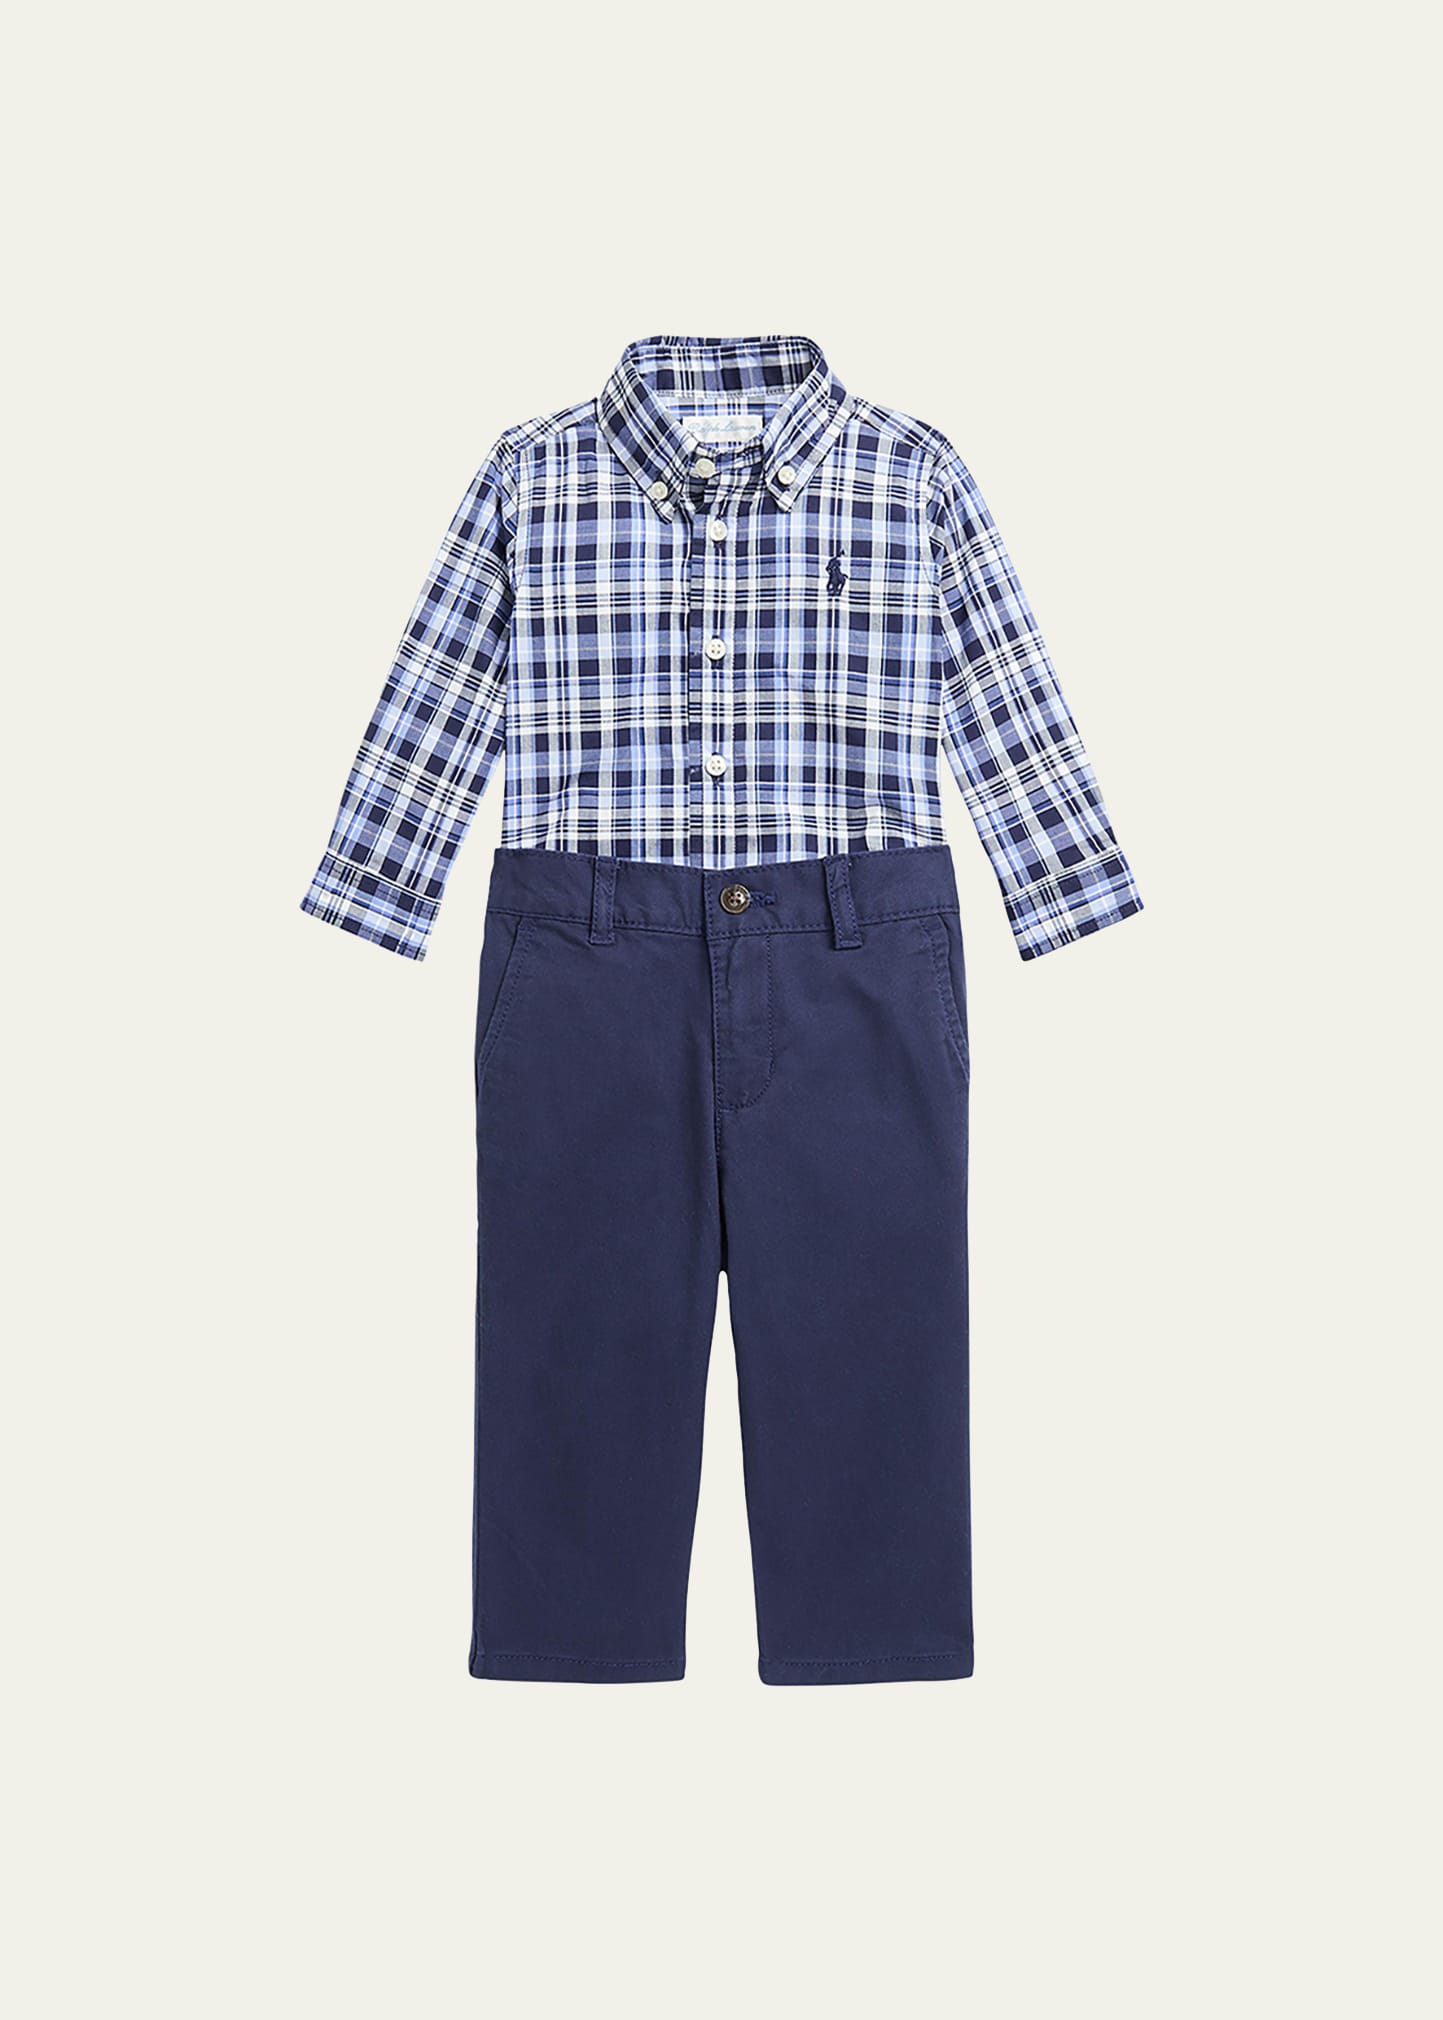 Boy's Plaid Shirt W/ Chino Pants Set, Size 3M-24M